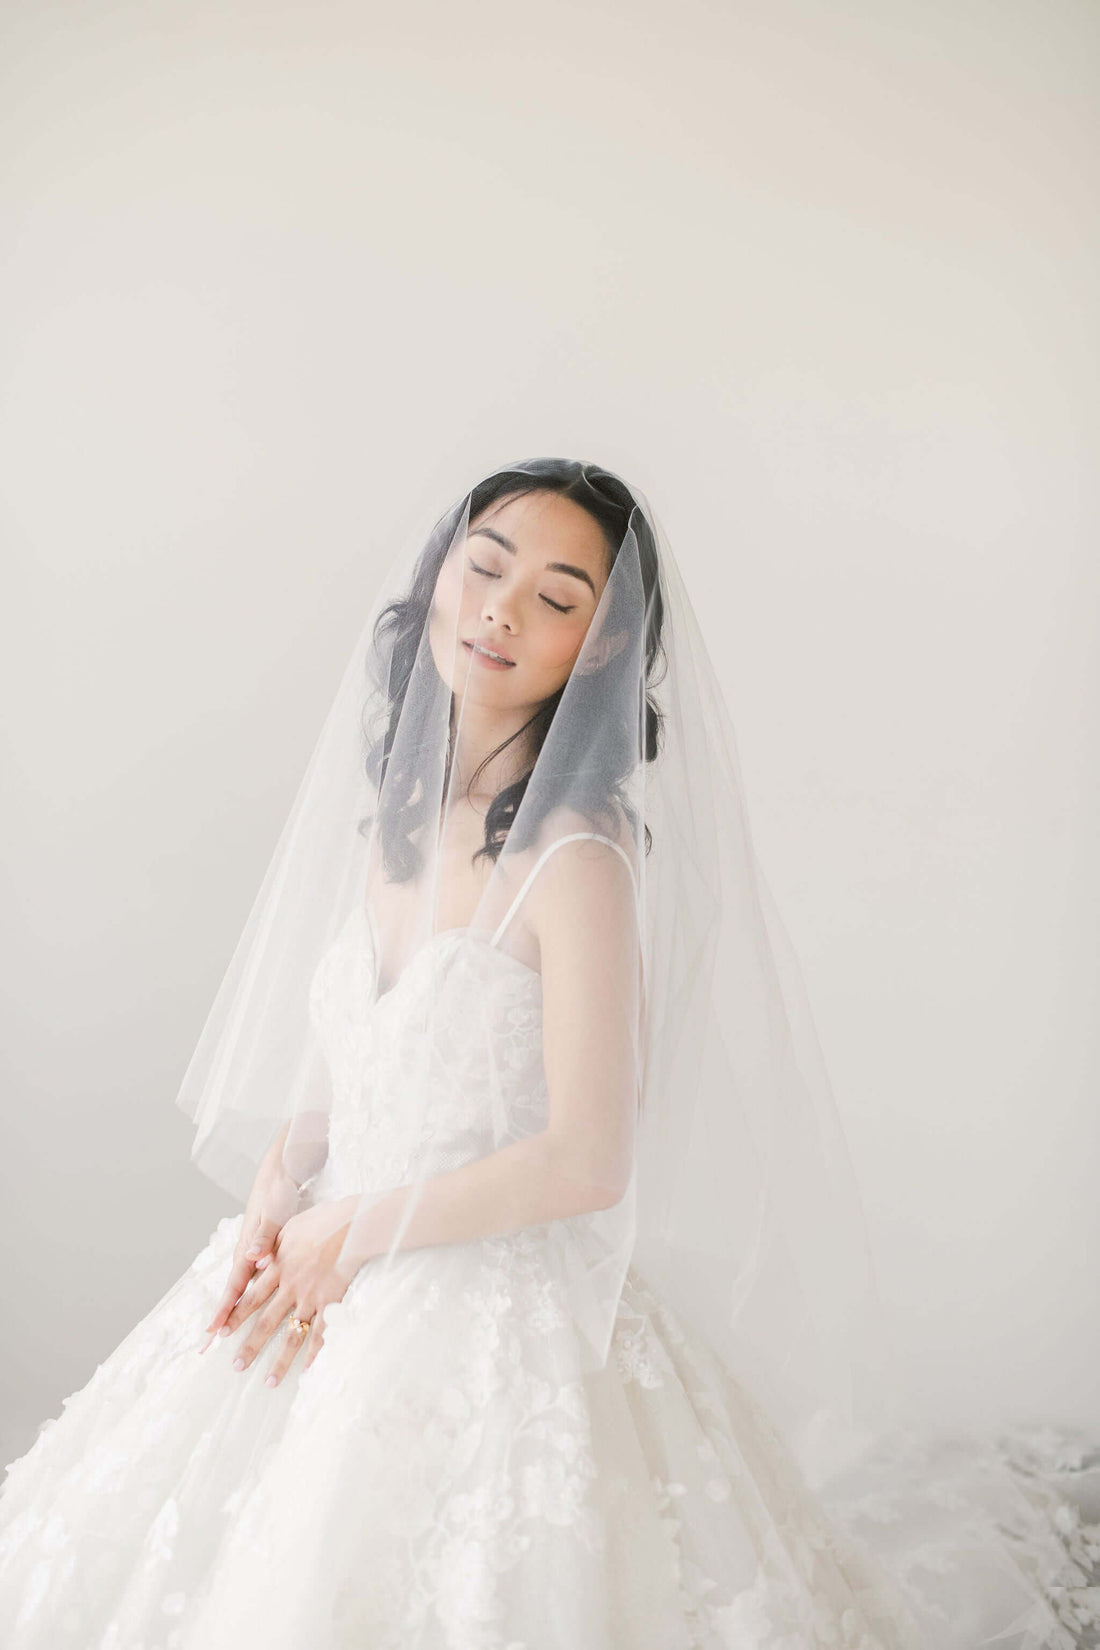 what Is a drop wedding veil?